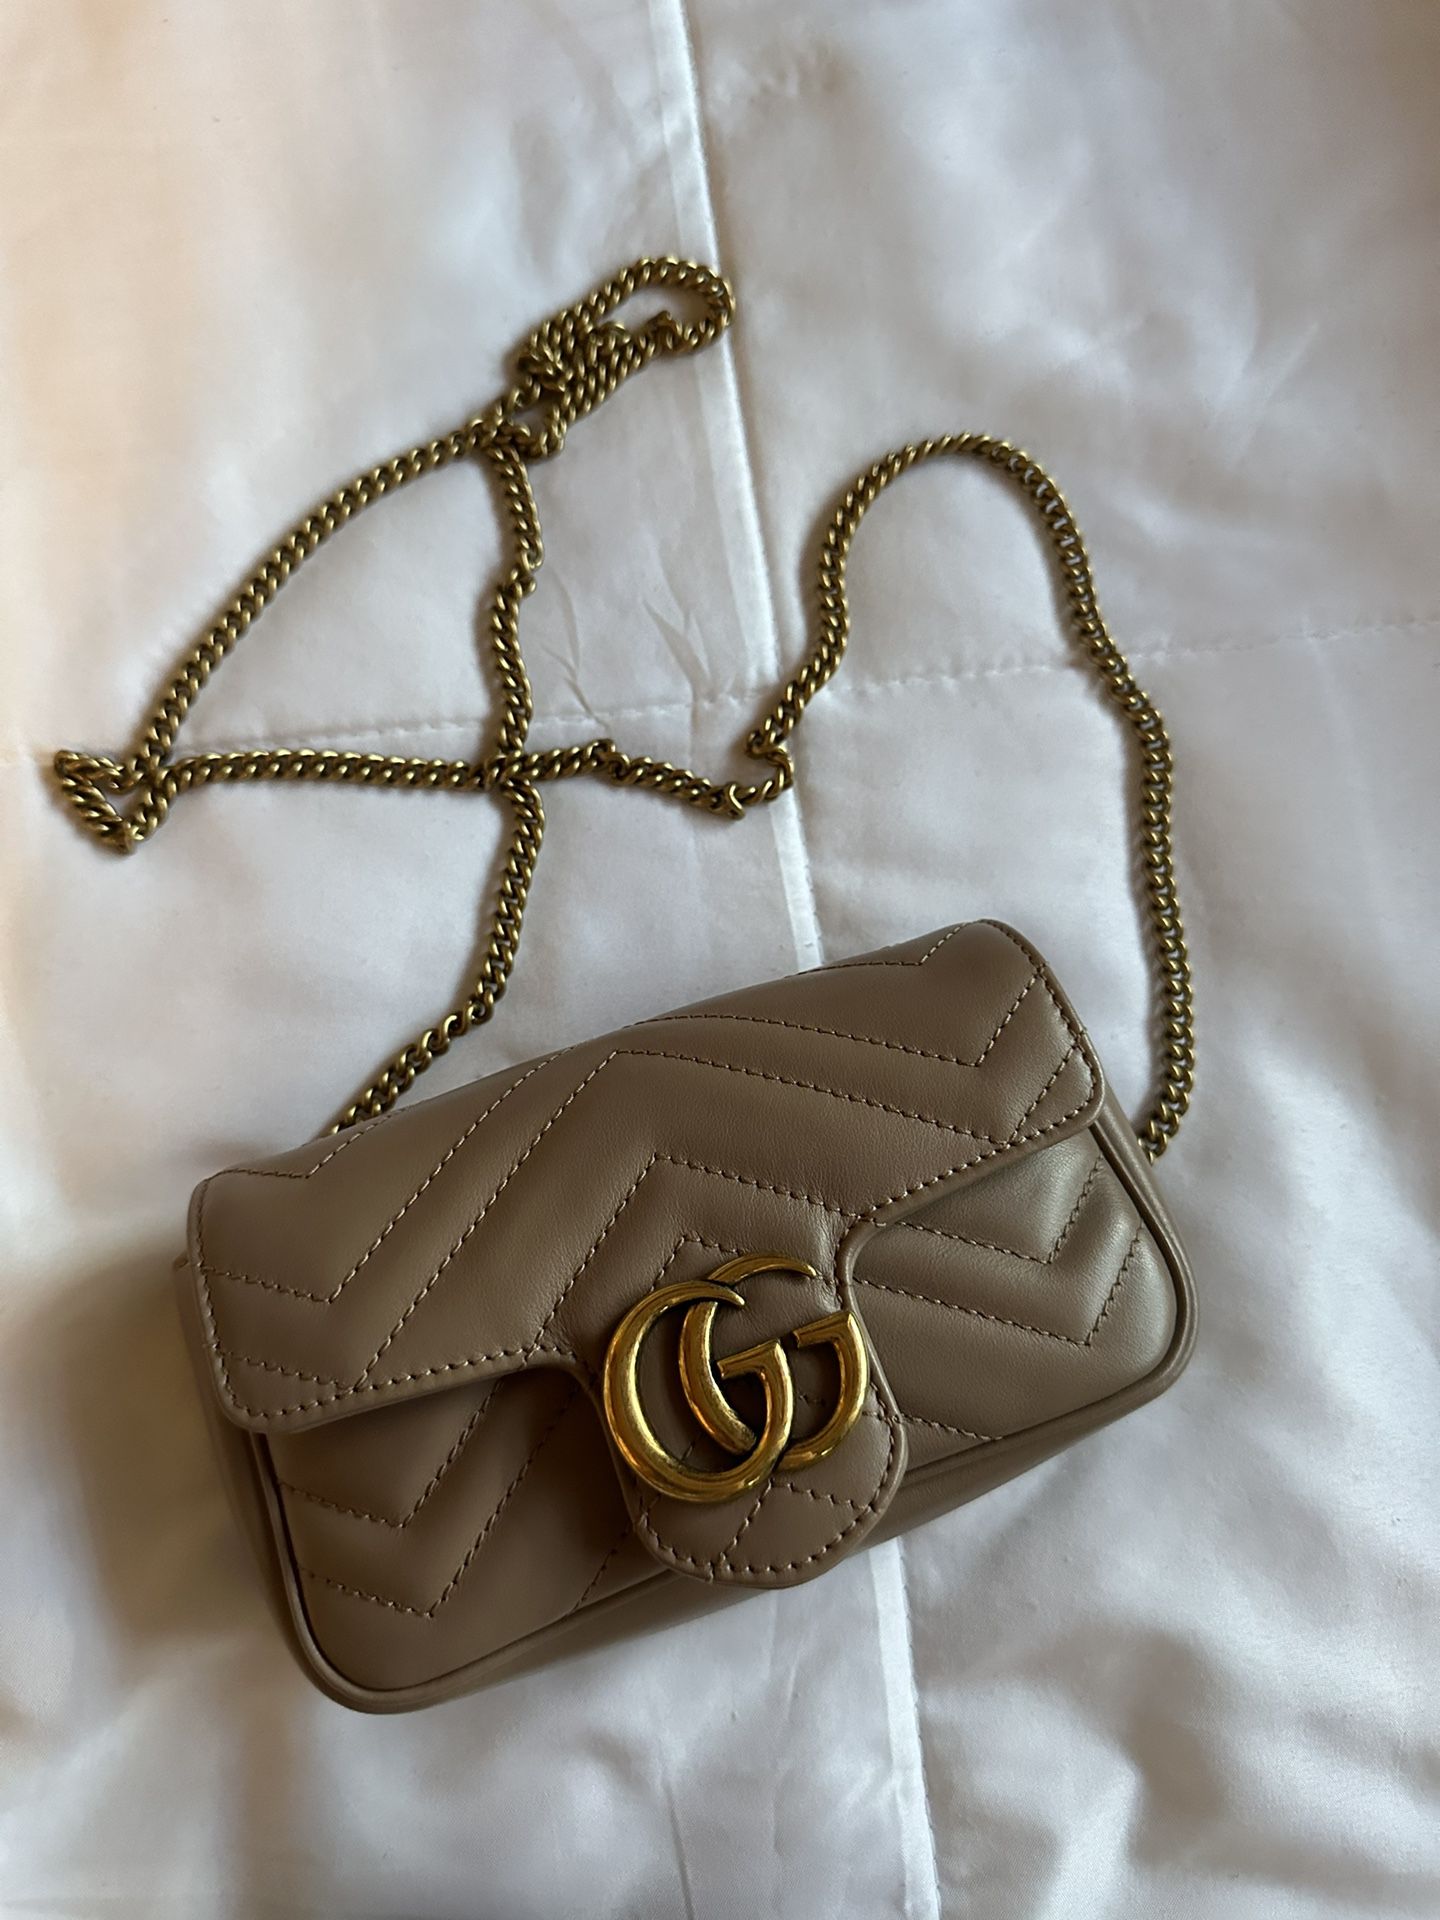 AUTHENTIC Gucci Marmont Super Mini Leather Bag